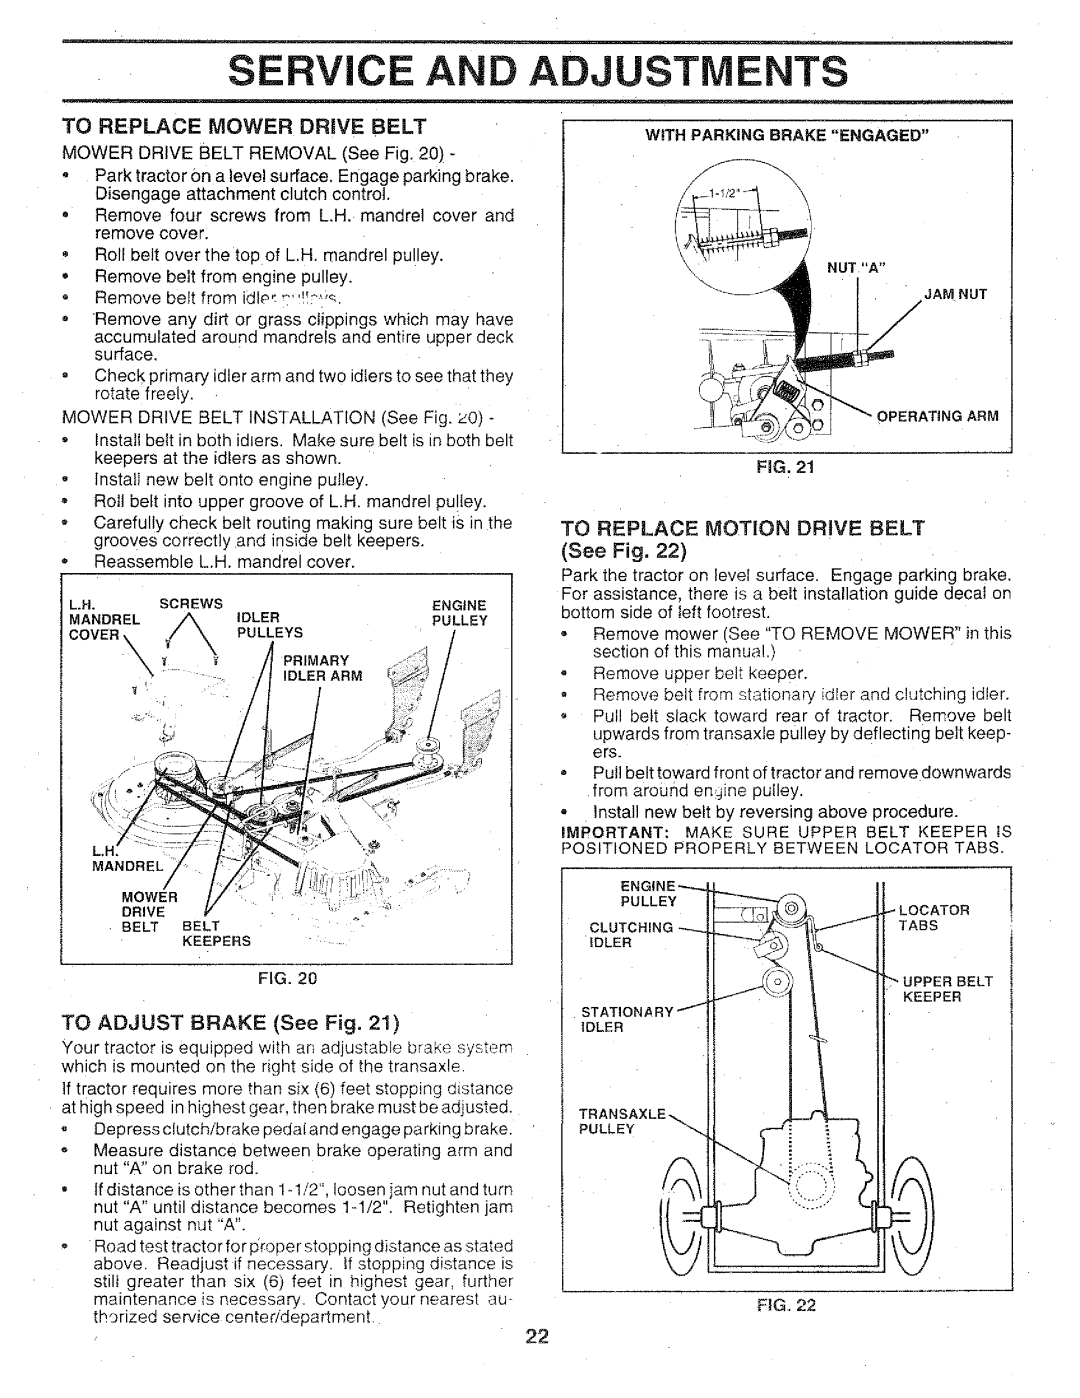 Sears 917.25147 owner manual Ervice And, Adjustments, TO ADJUST BRAKE See Fig 